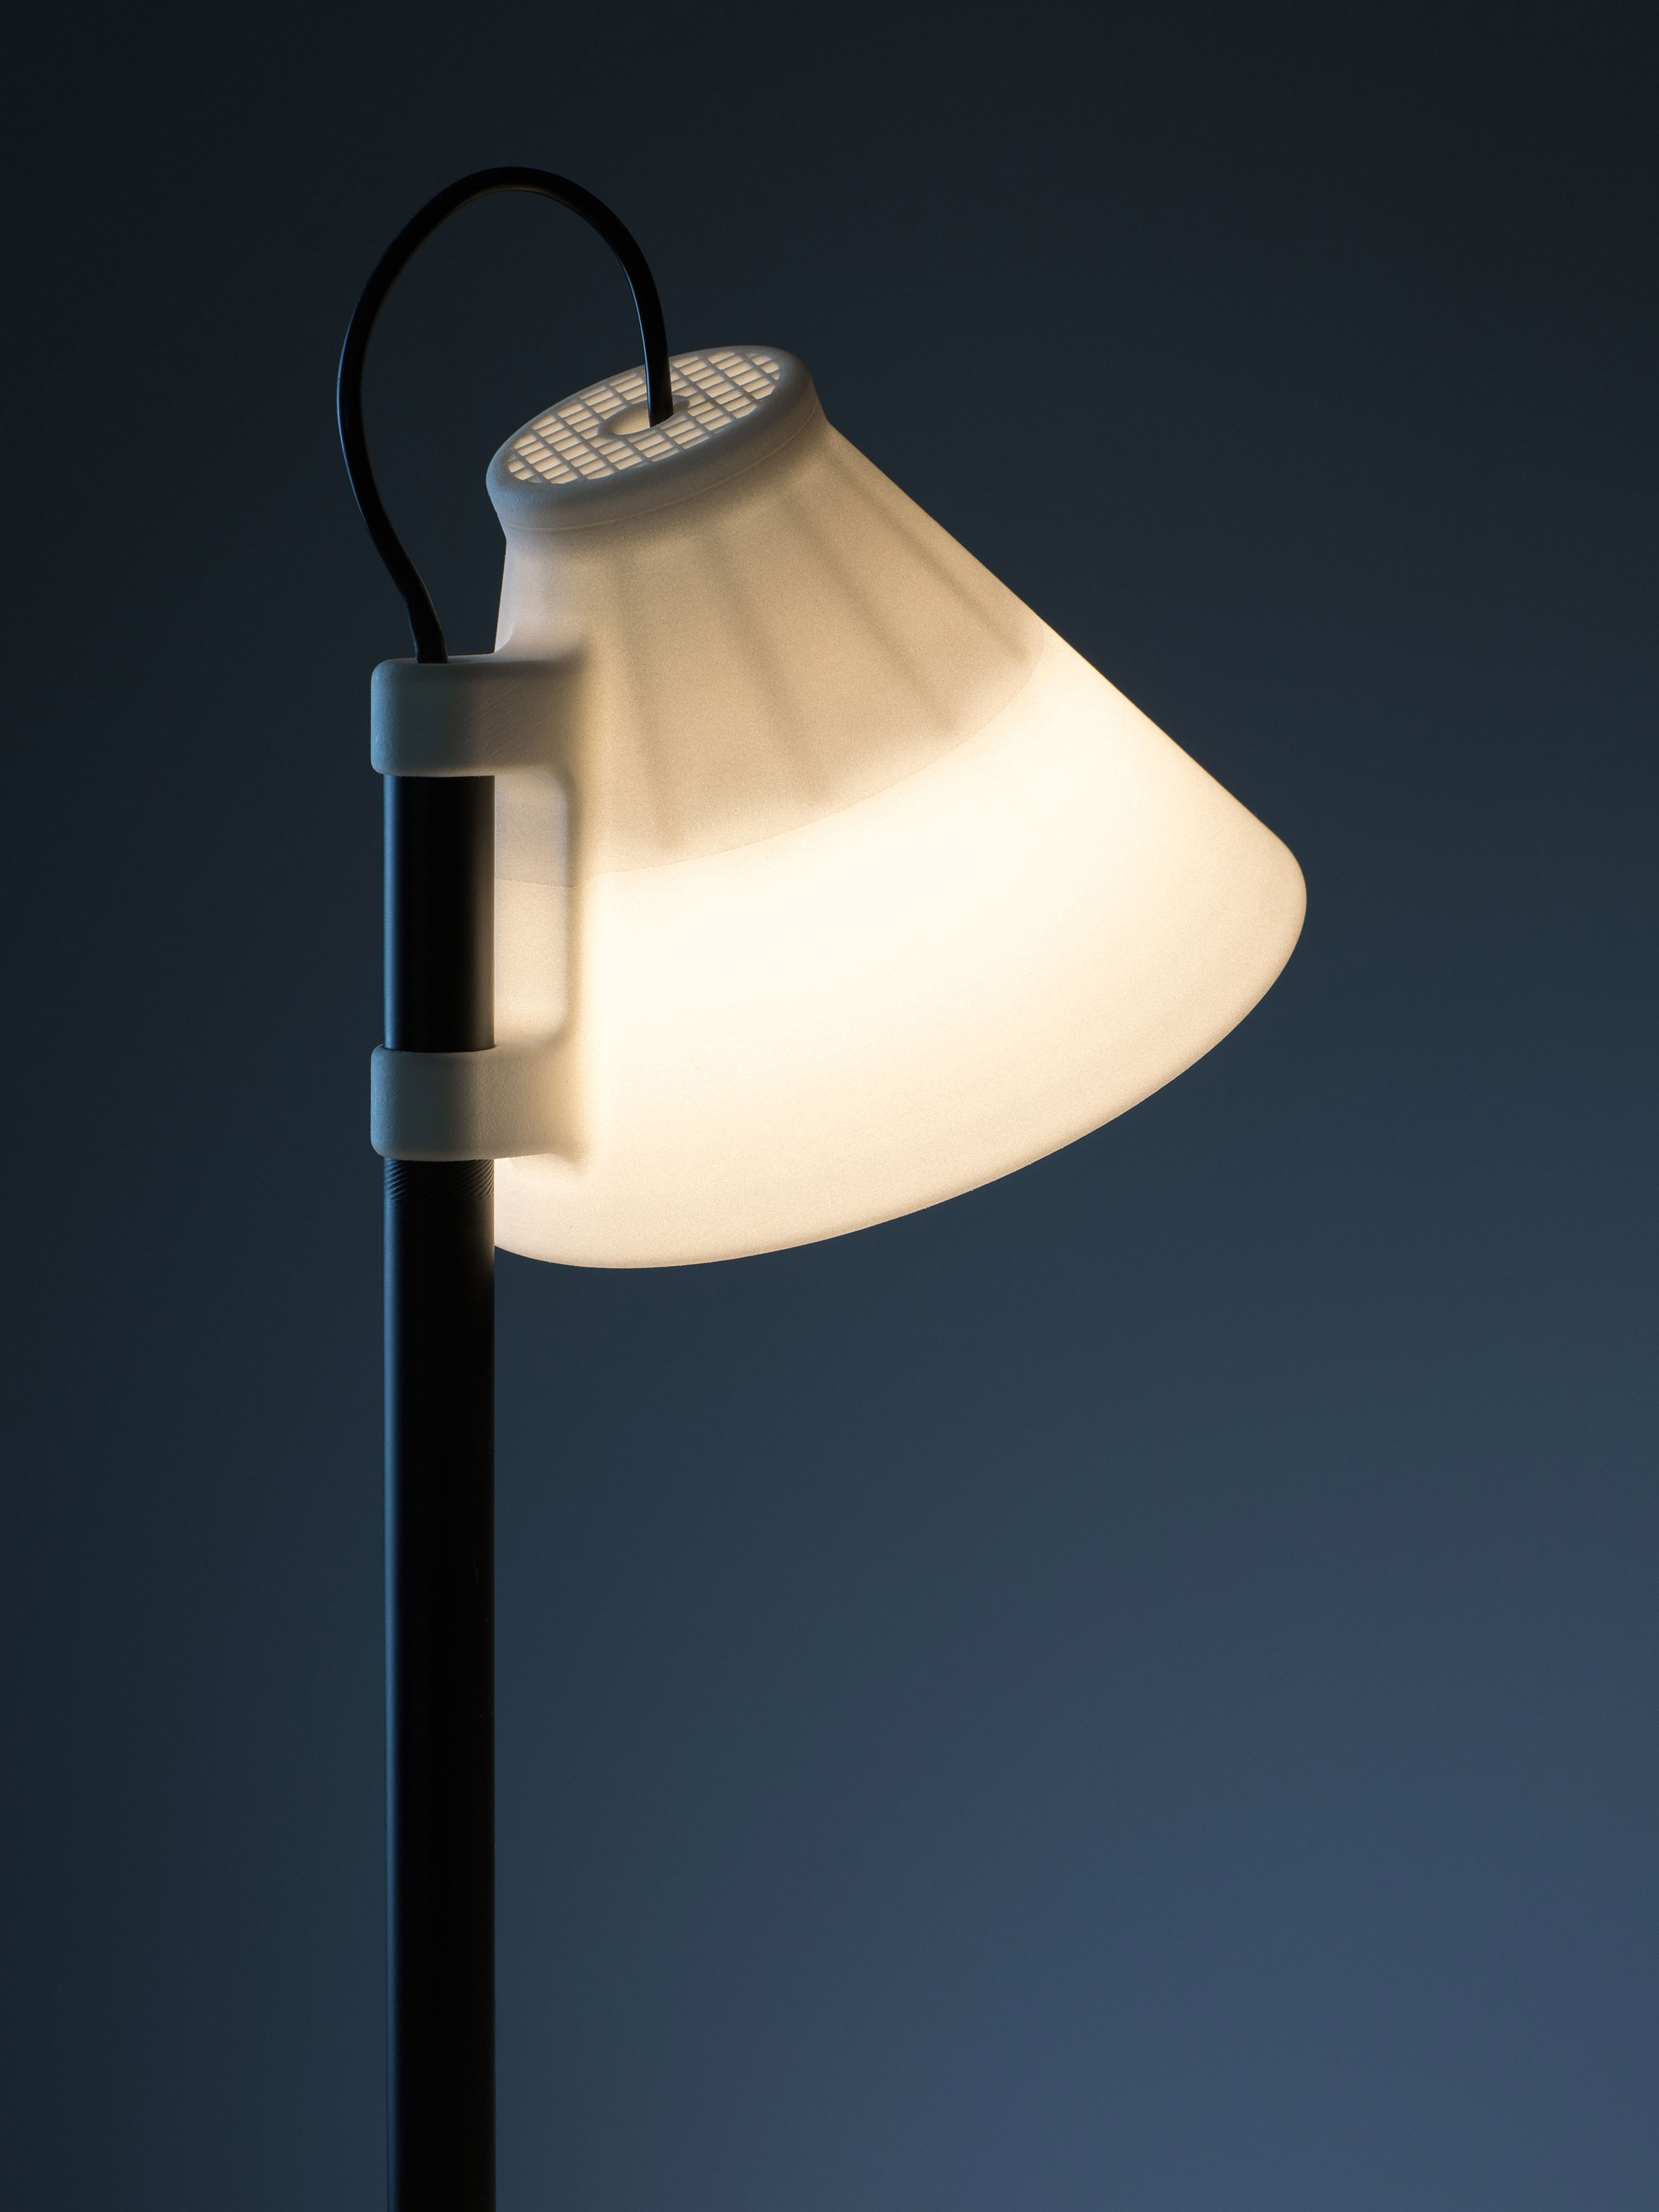 Klemens Schillinger's lamps supply electricity in exchange for users' smartphones